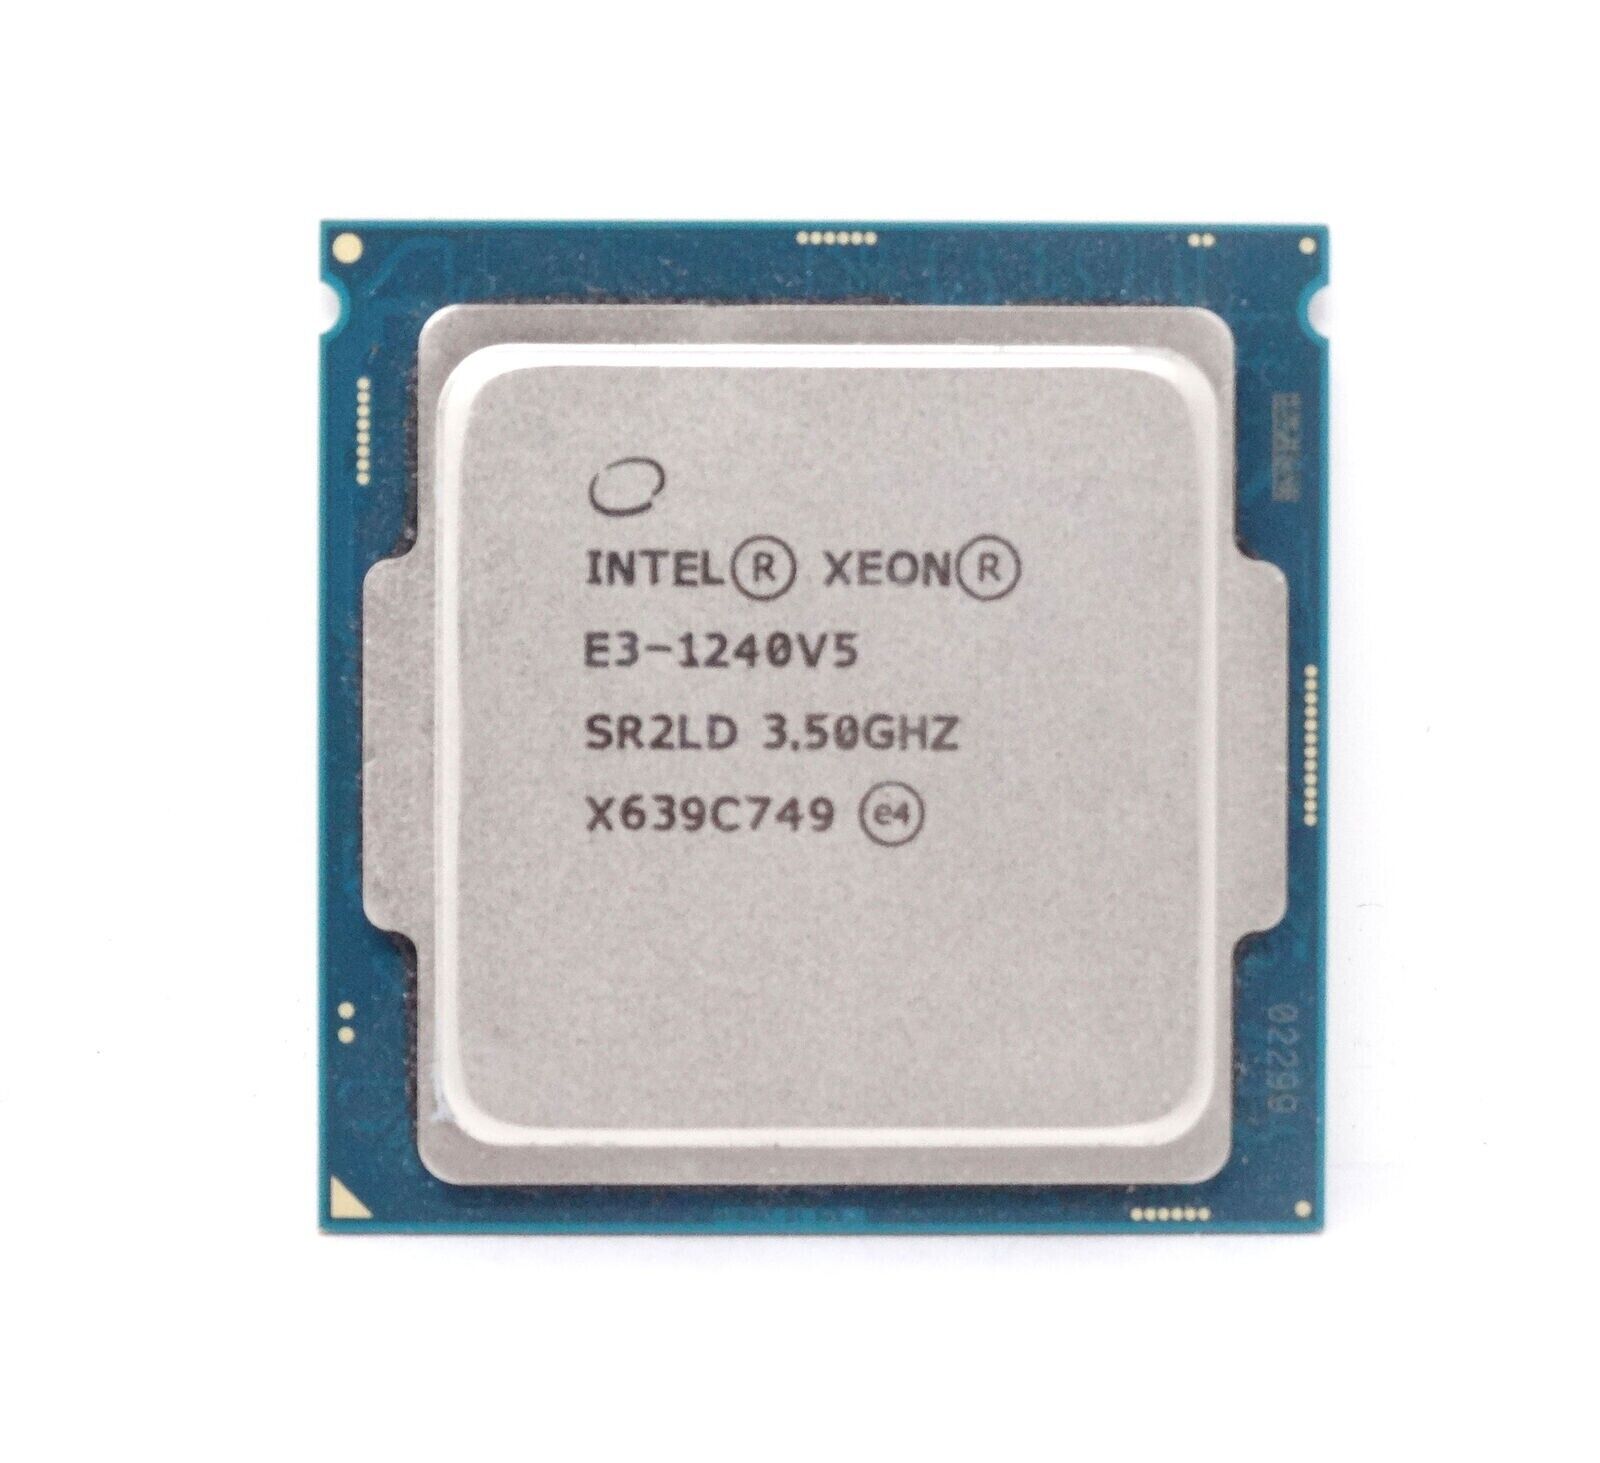 Intel Xeon E3-1240 v5 SR2LD 3.5GHz 8MB Quad Core LGA1151 CPU Processor W1-1(16)